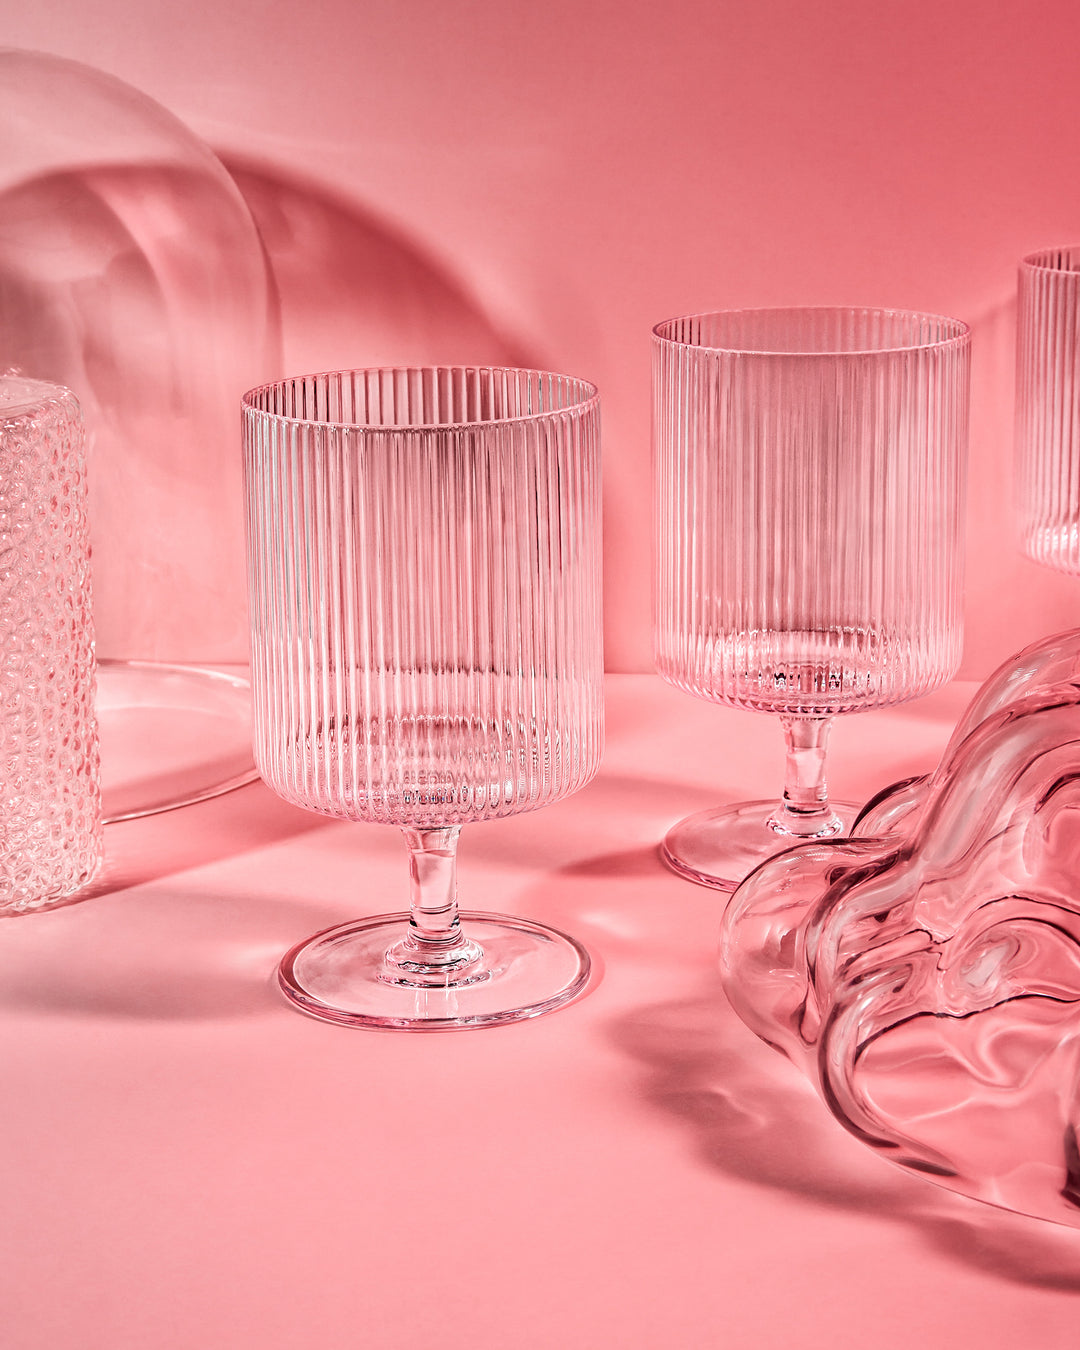 Glassique Cadeau Vintage Art Deco Ribbed Goblet Cocktail Glasses with Stem | Set of 4 | 10 oz Short Stemmed Crystal Tumblers for Drinking Classic